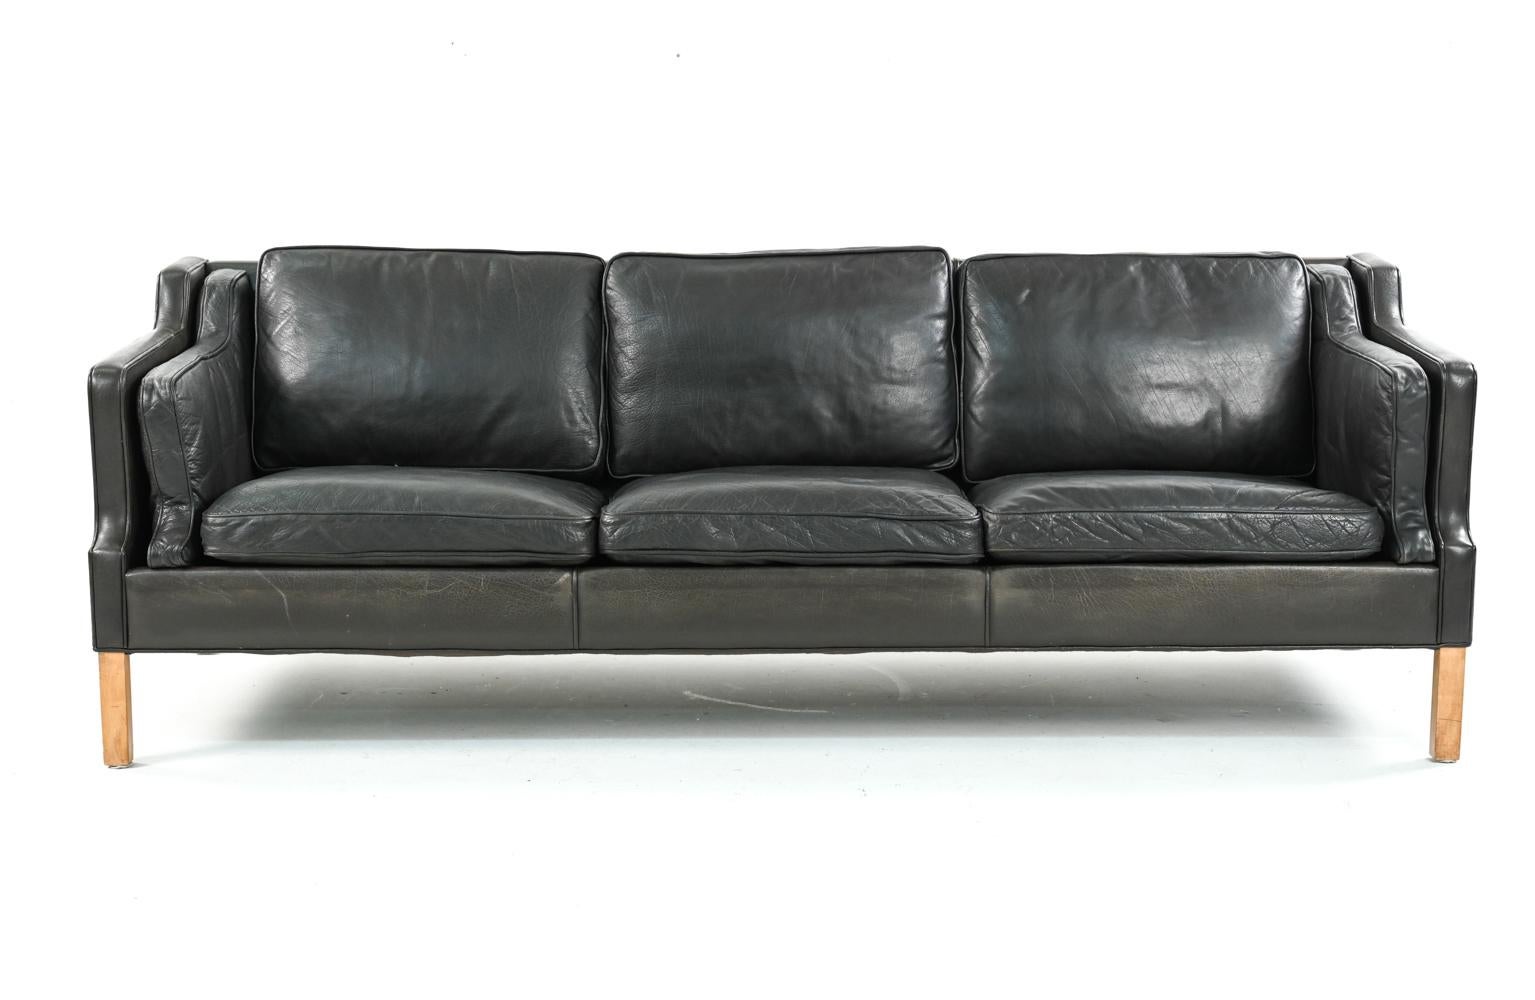 An impressive Danish mid-century leather four-seater sofa designed by Borge Mogensen.